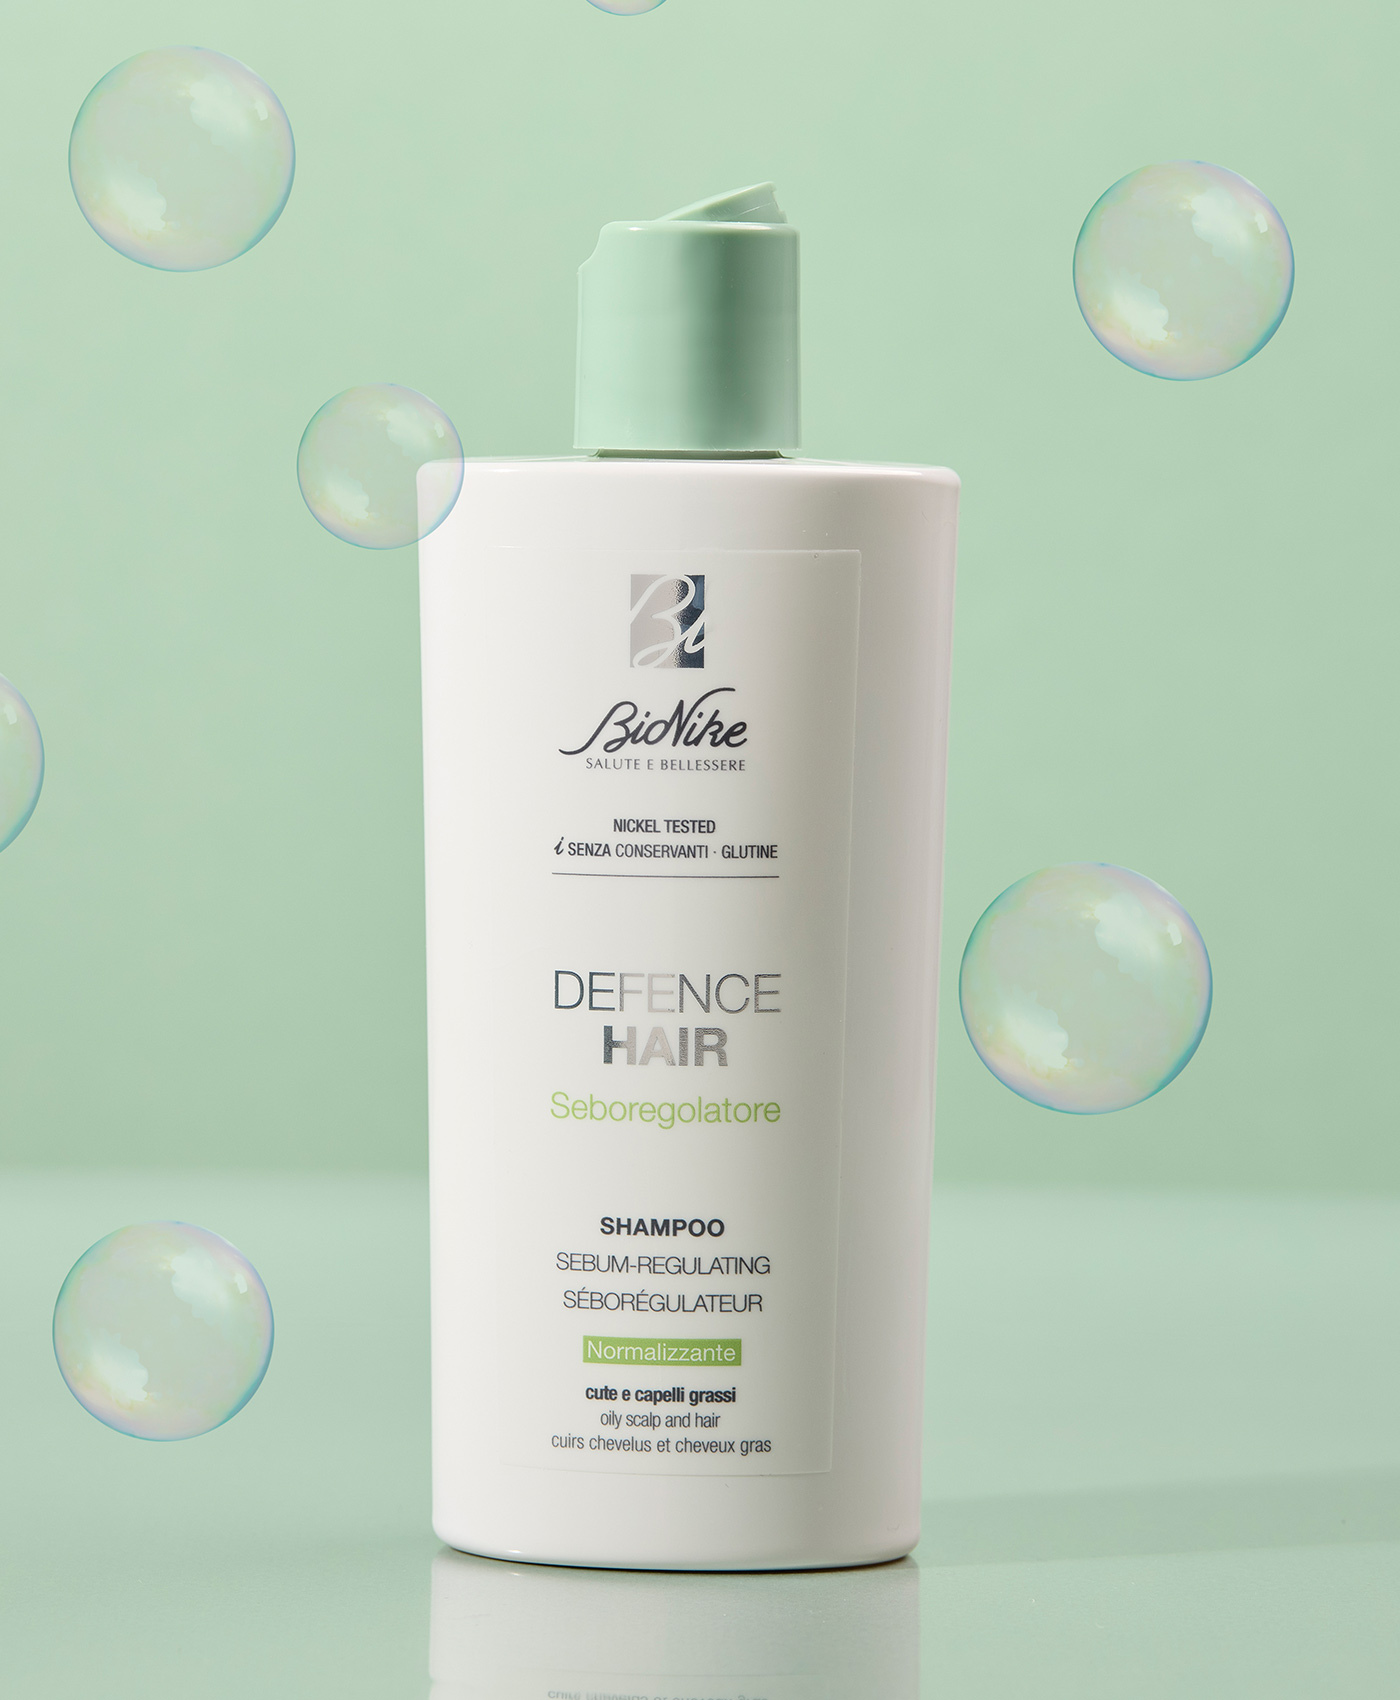 Sebum-regulating Shampoo 200 ml - BioNike - Sito Ufficiale